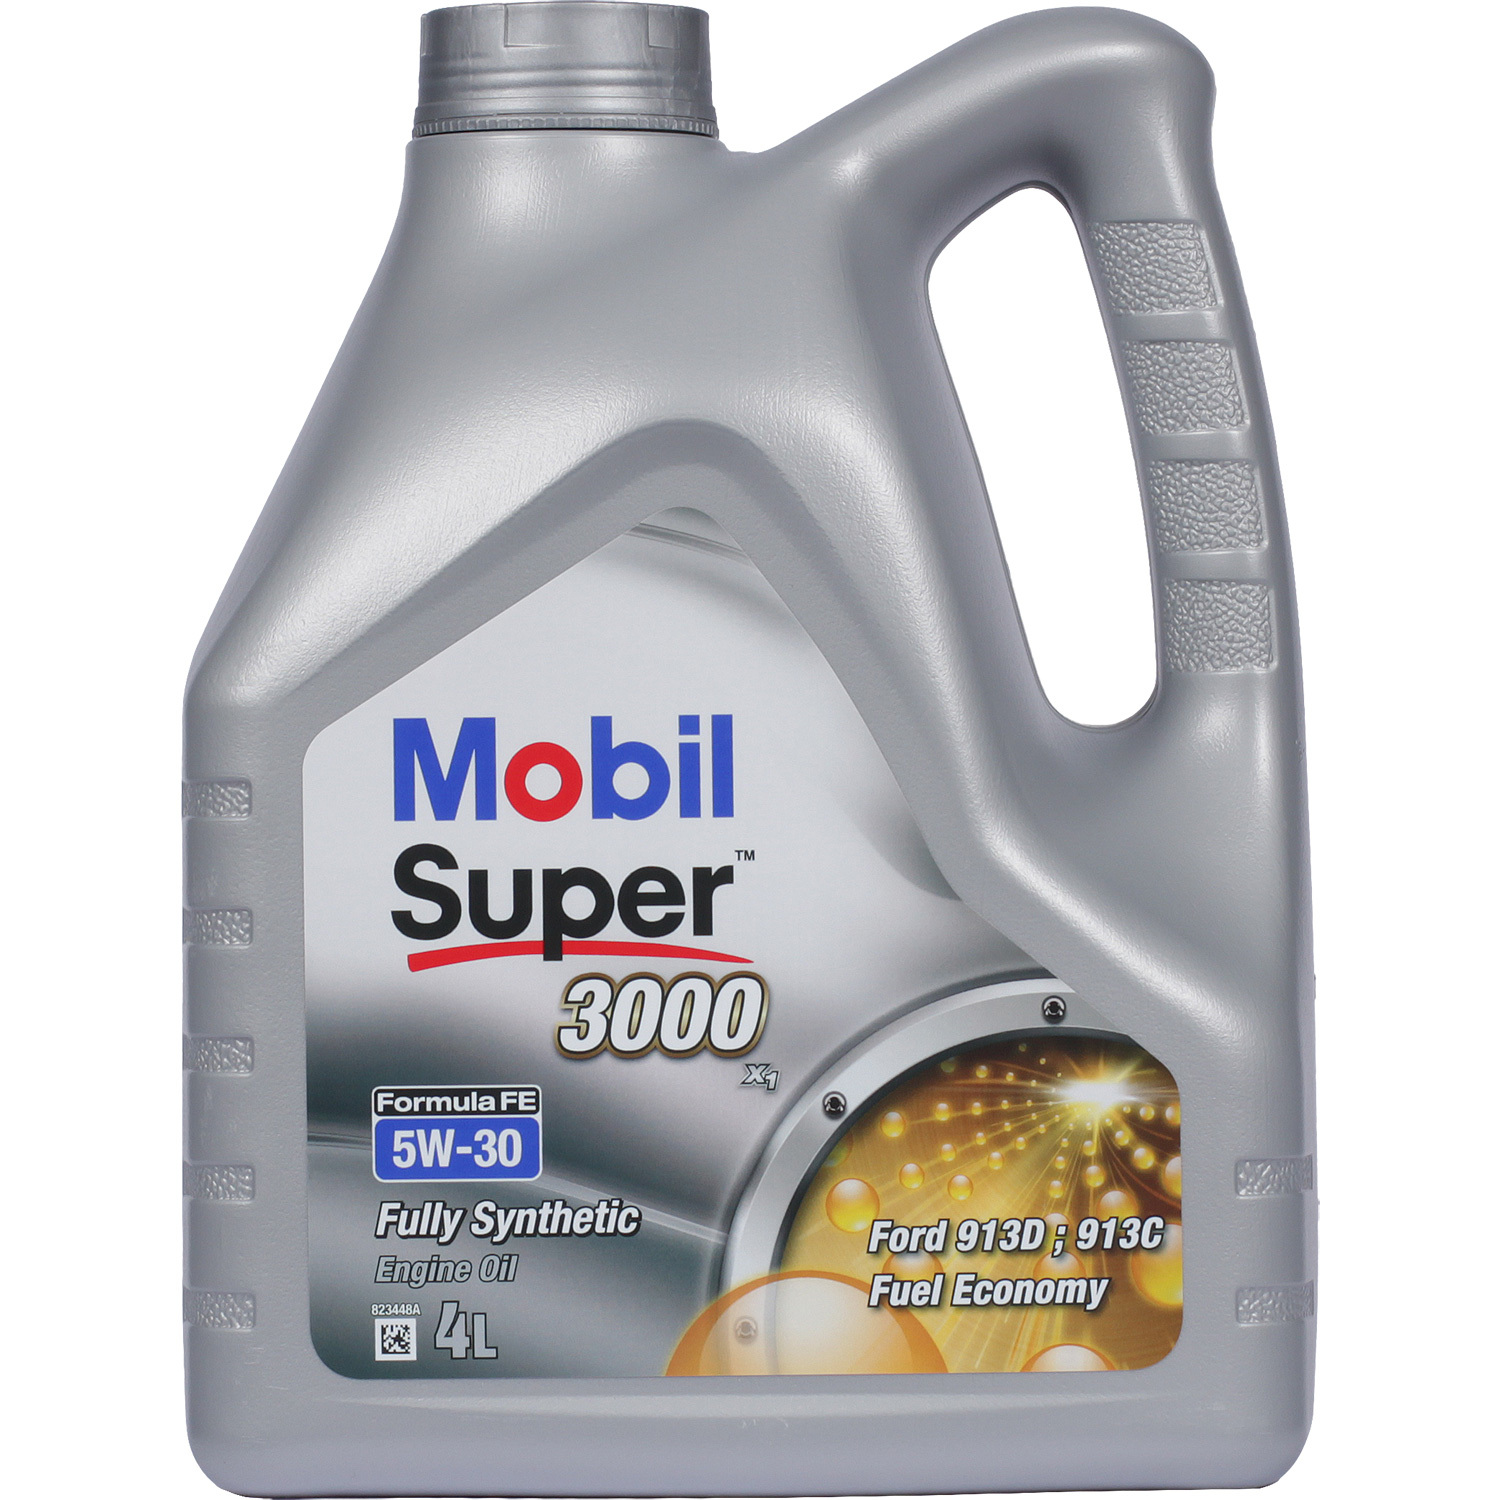 Mobil Моторное масло Mobil Super 3000 X1 Formula FE 5W-30, 4 л моторное масло mobil 1 esp formula 5w 30 канистра 4 л